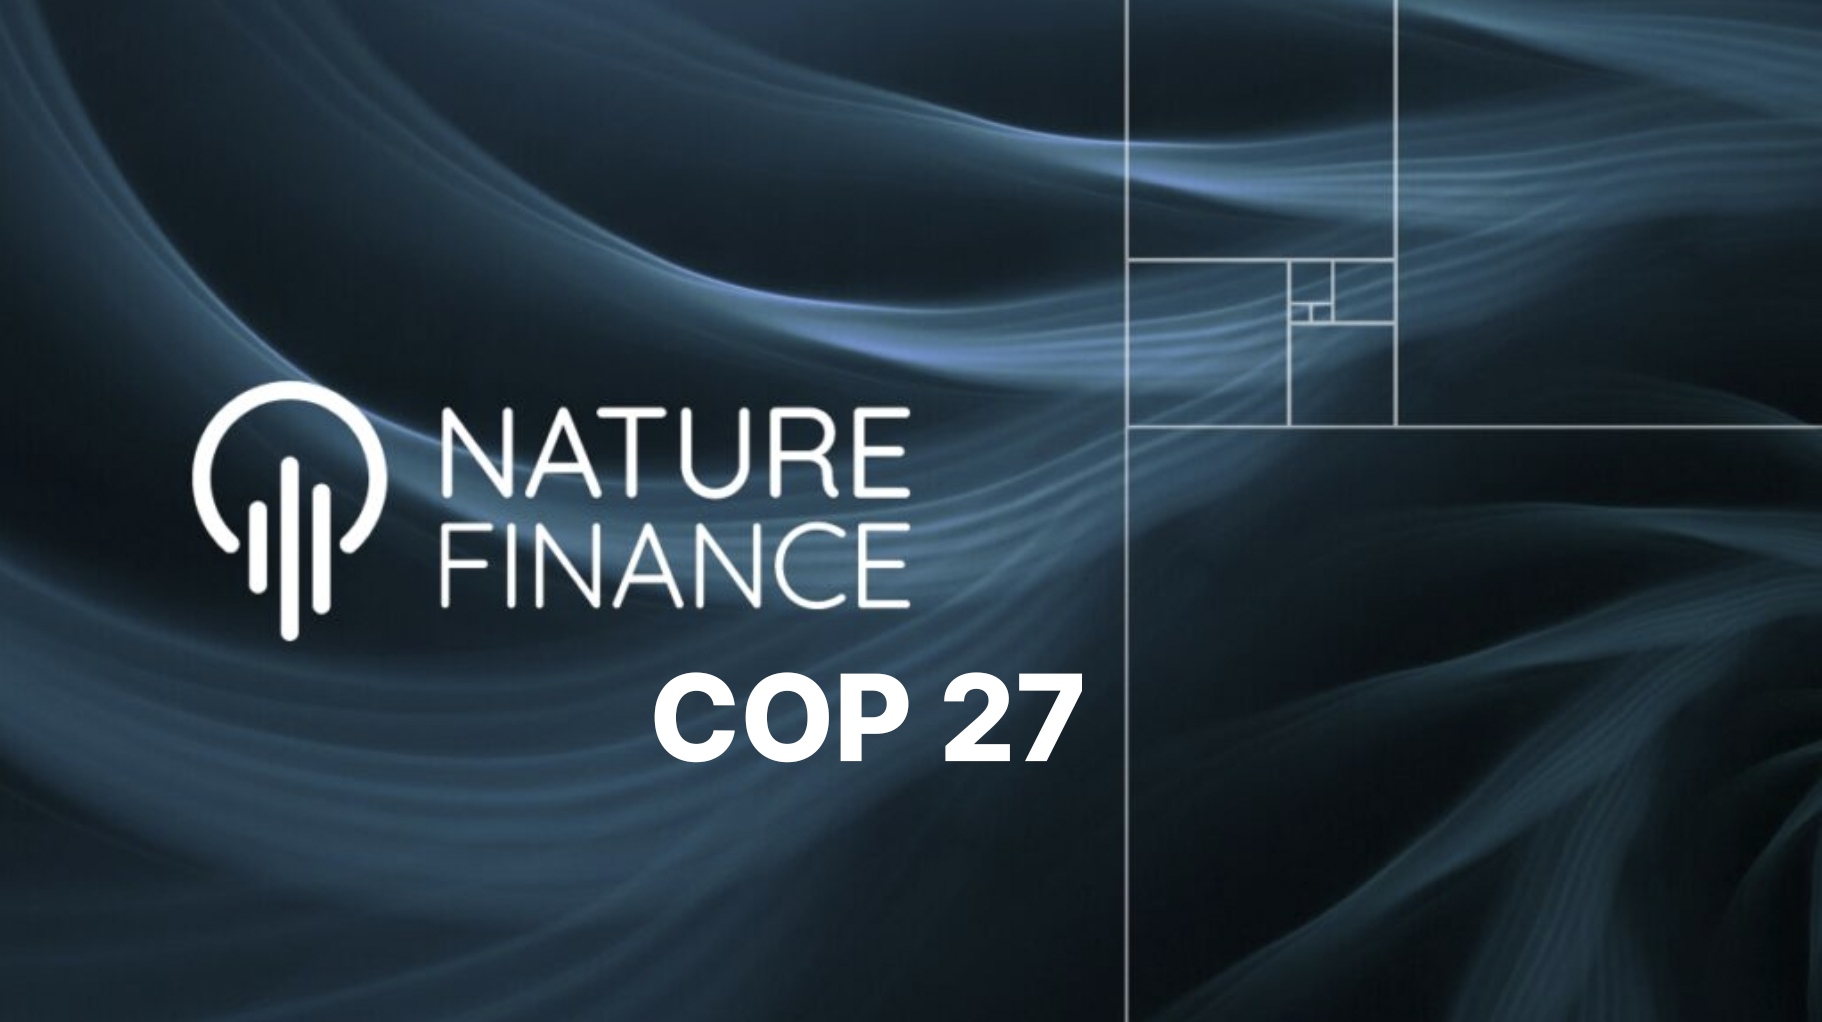 NatureFinance Heads to COP 27